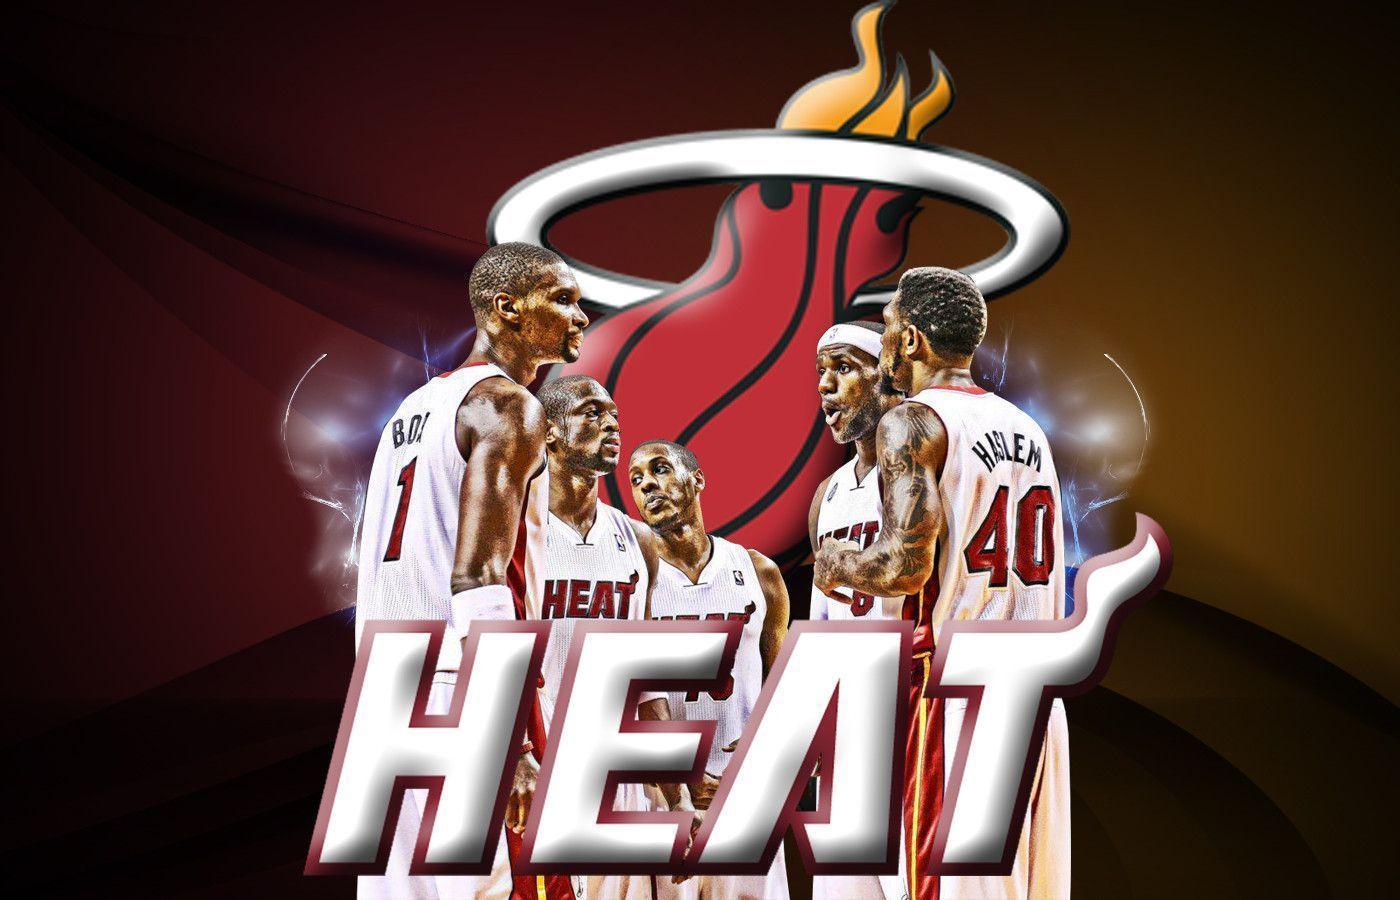 Cool Miami Heat Logo Wallpaper 04. hdwallpaper